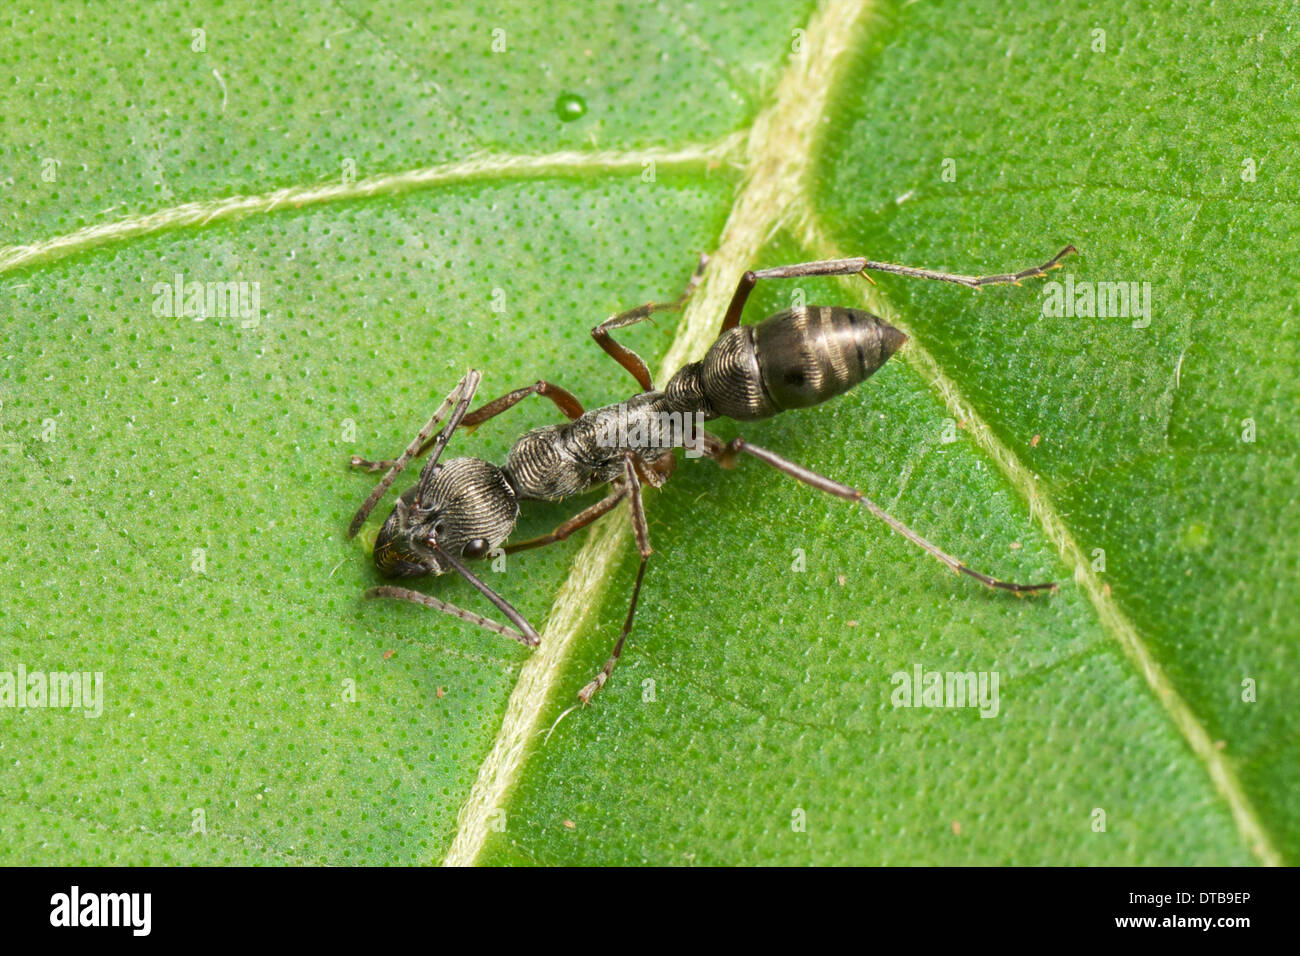 Diacamma sp. ant with a fingerprint like pattern on its exoskeleton. Huai Kha Khaeng Wildlife Sanctuary, Thailand. Stock Photo